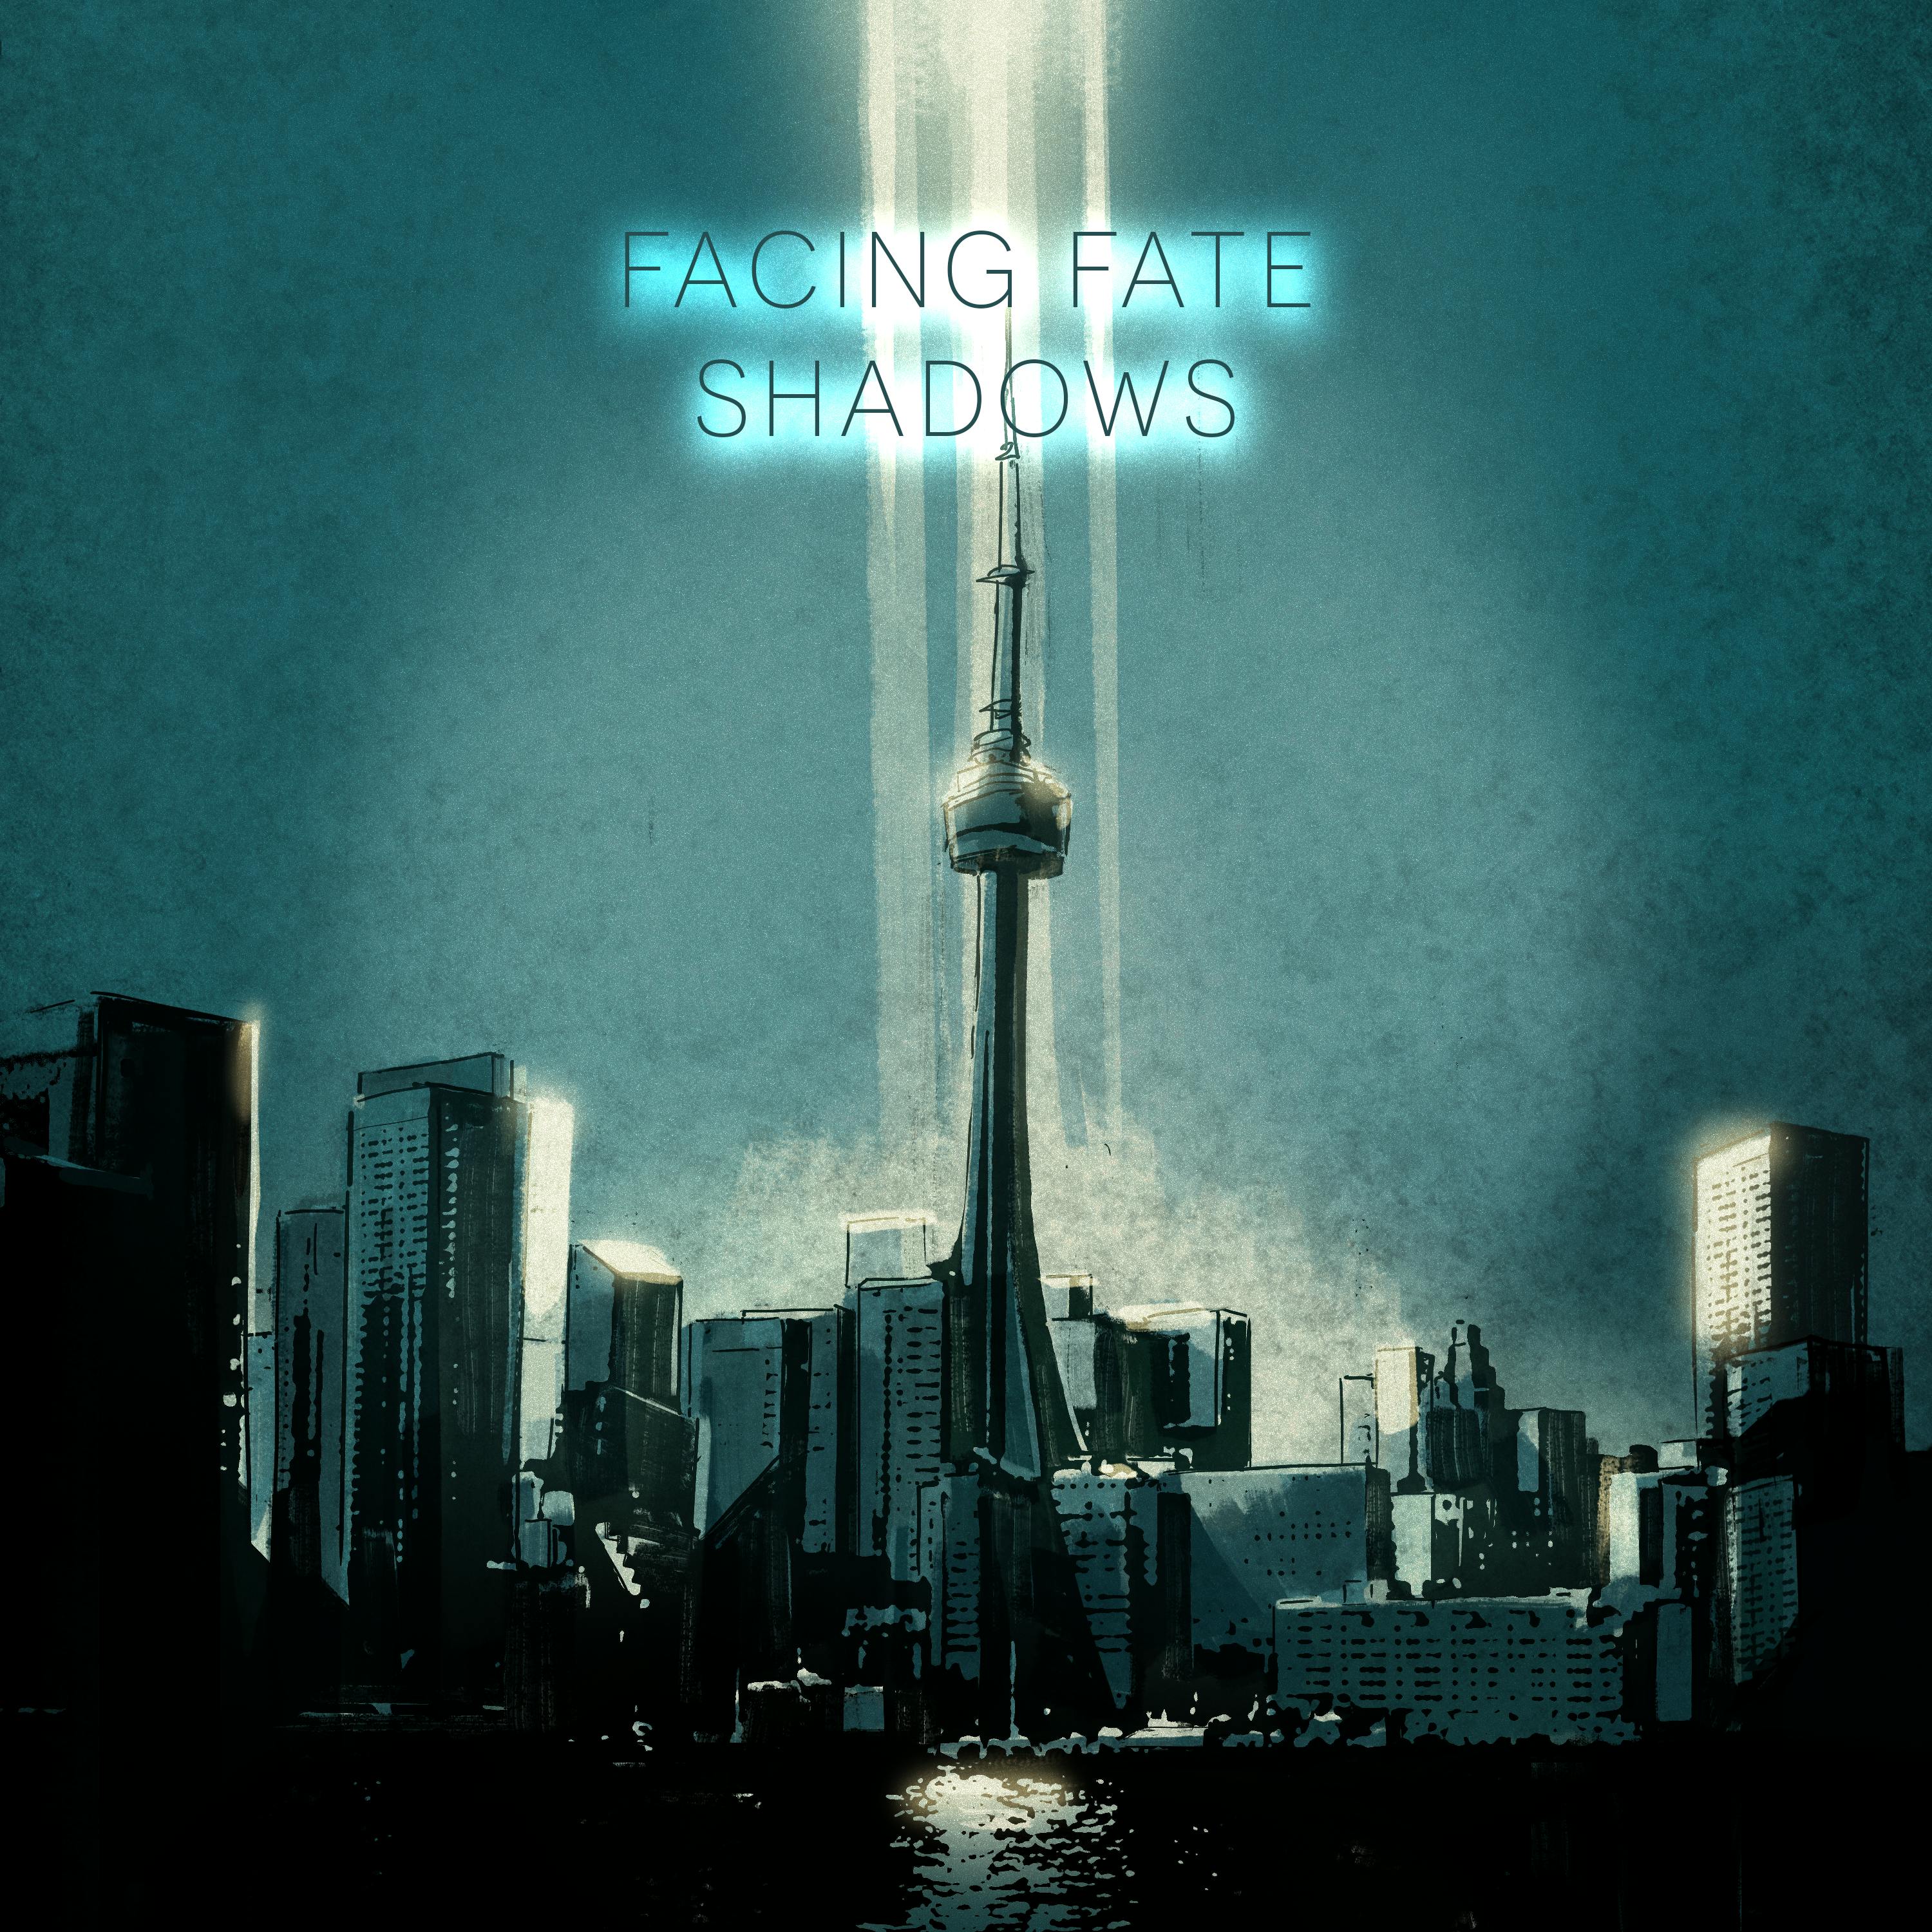 Shadows; Episode 02 - Finding Reynolds